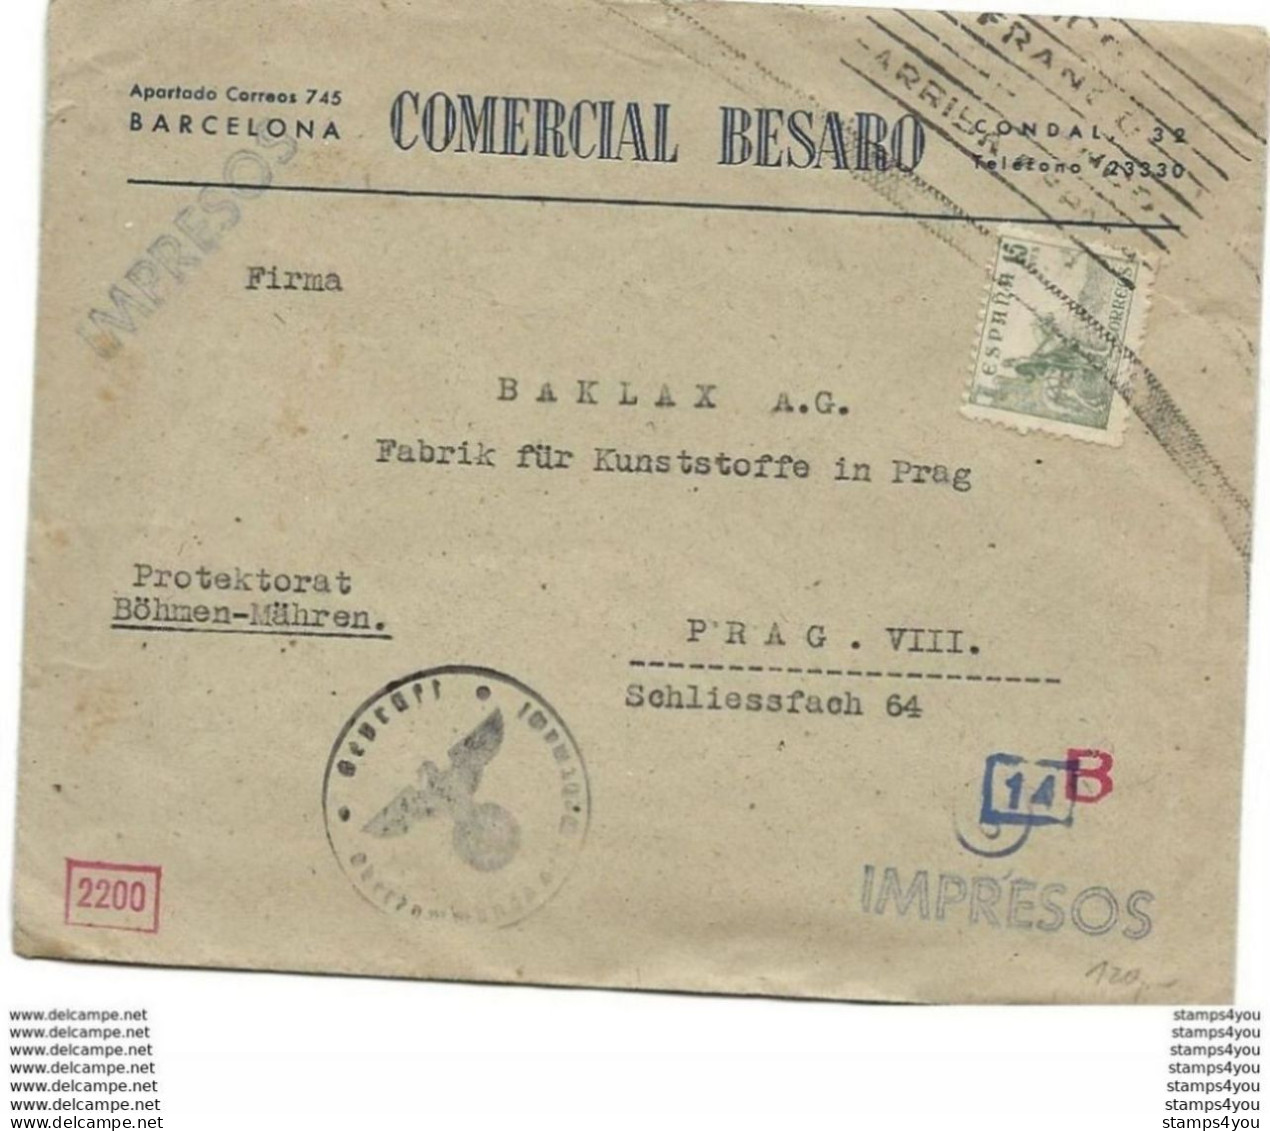 221 - 9 - Enveloppe Envoyée De Barcelona à Prag - Censure - 2. Weltkrieg